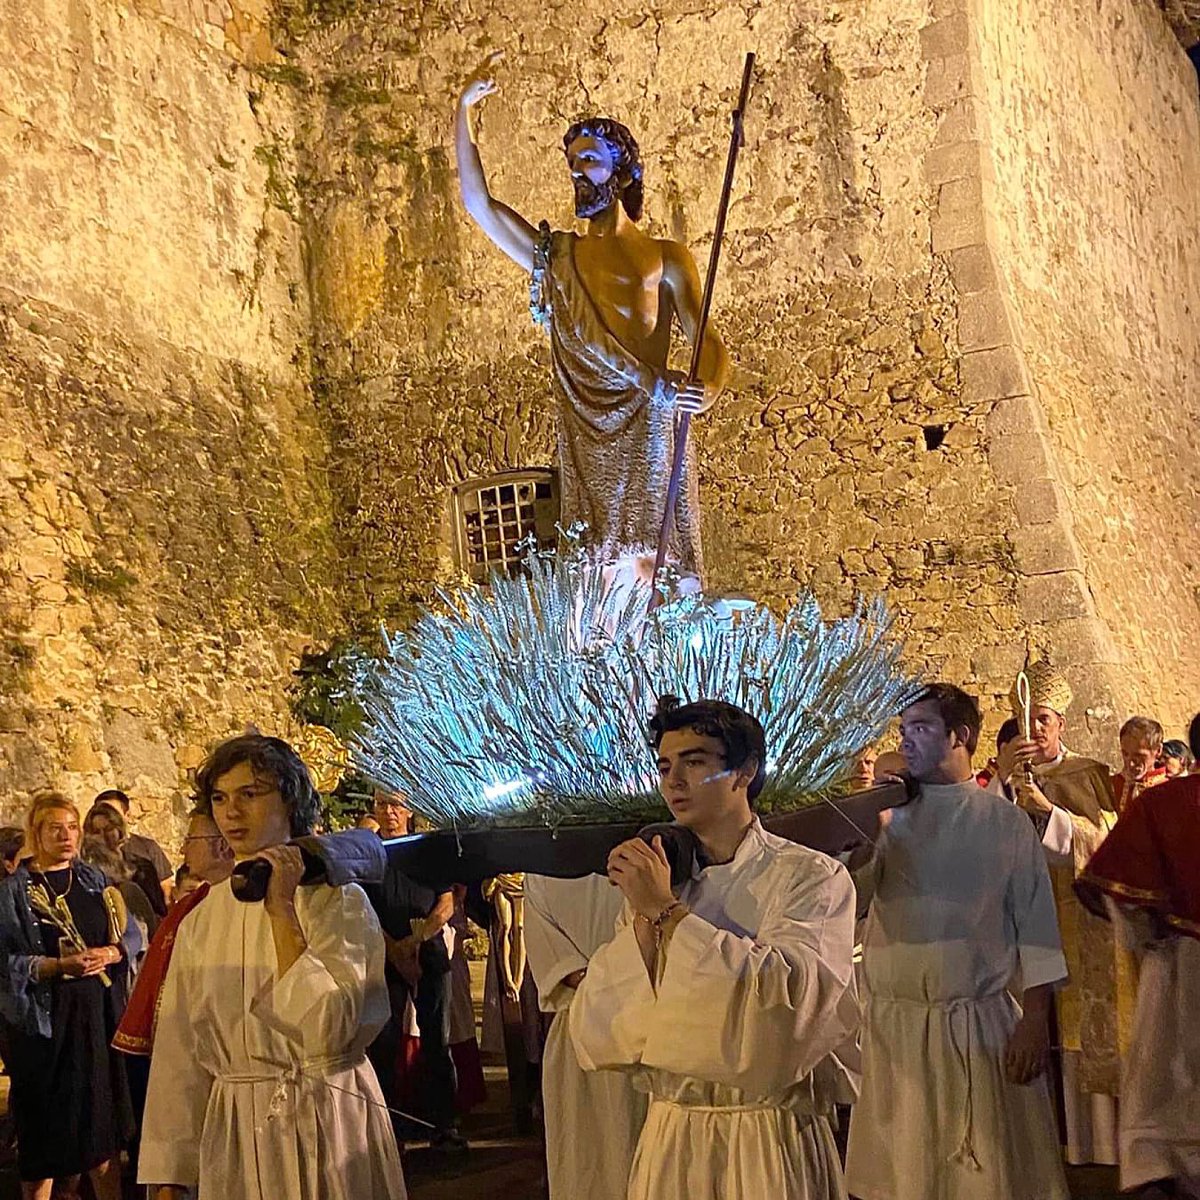 Bona festa di a San Ghjuvà a tutti ! 🙏🏼
———
#dioceseajaccio #saintjeanbaptiste #sanghjuvà #portovecchio #corsica #eglisecatholiquedecorse #festa #eglise #catholique #mgrbustillo